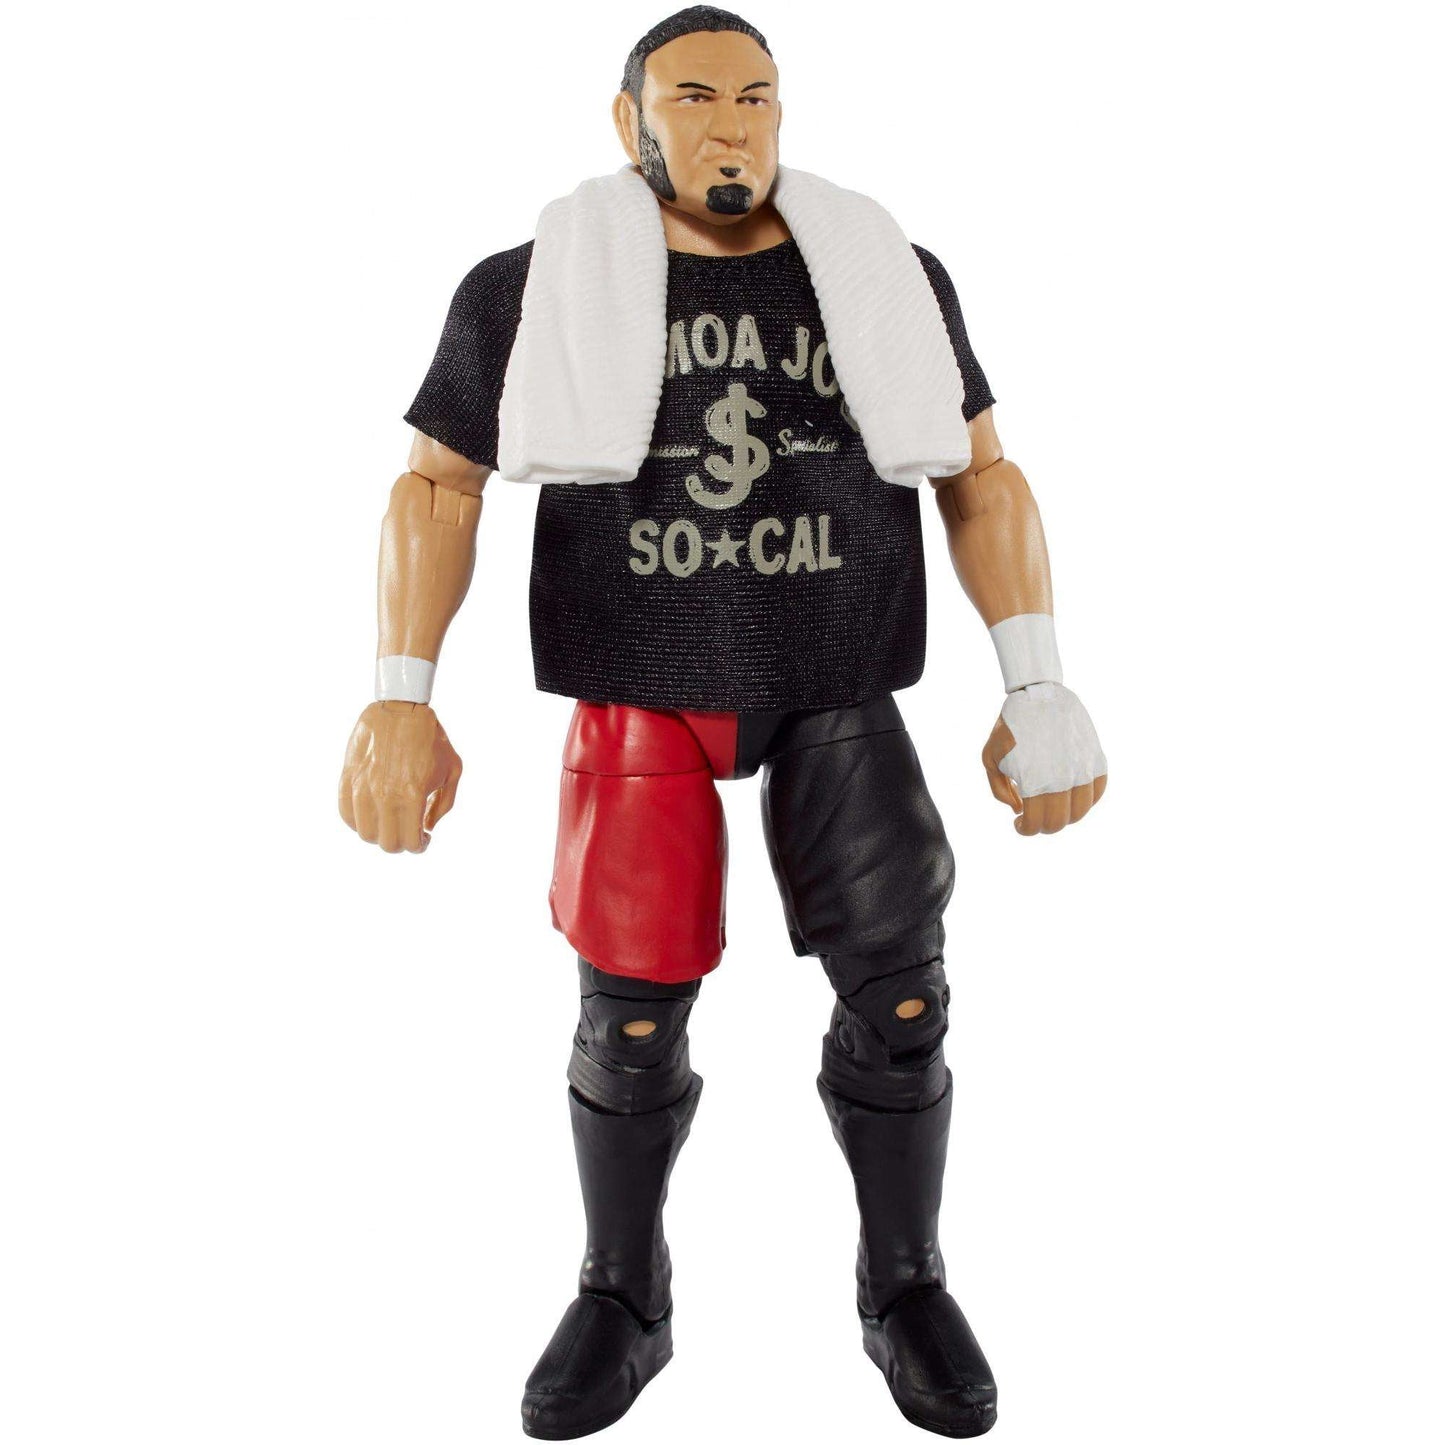 2016 WWE Mattel Elite Collection Series 43 Samoa Joe